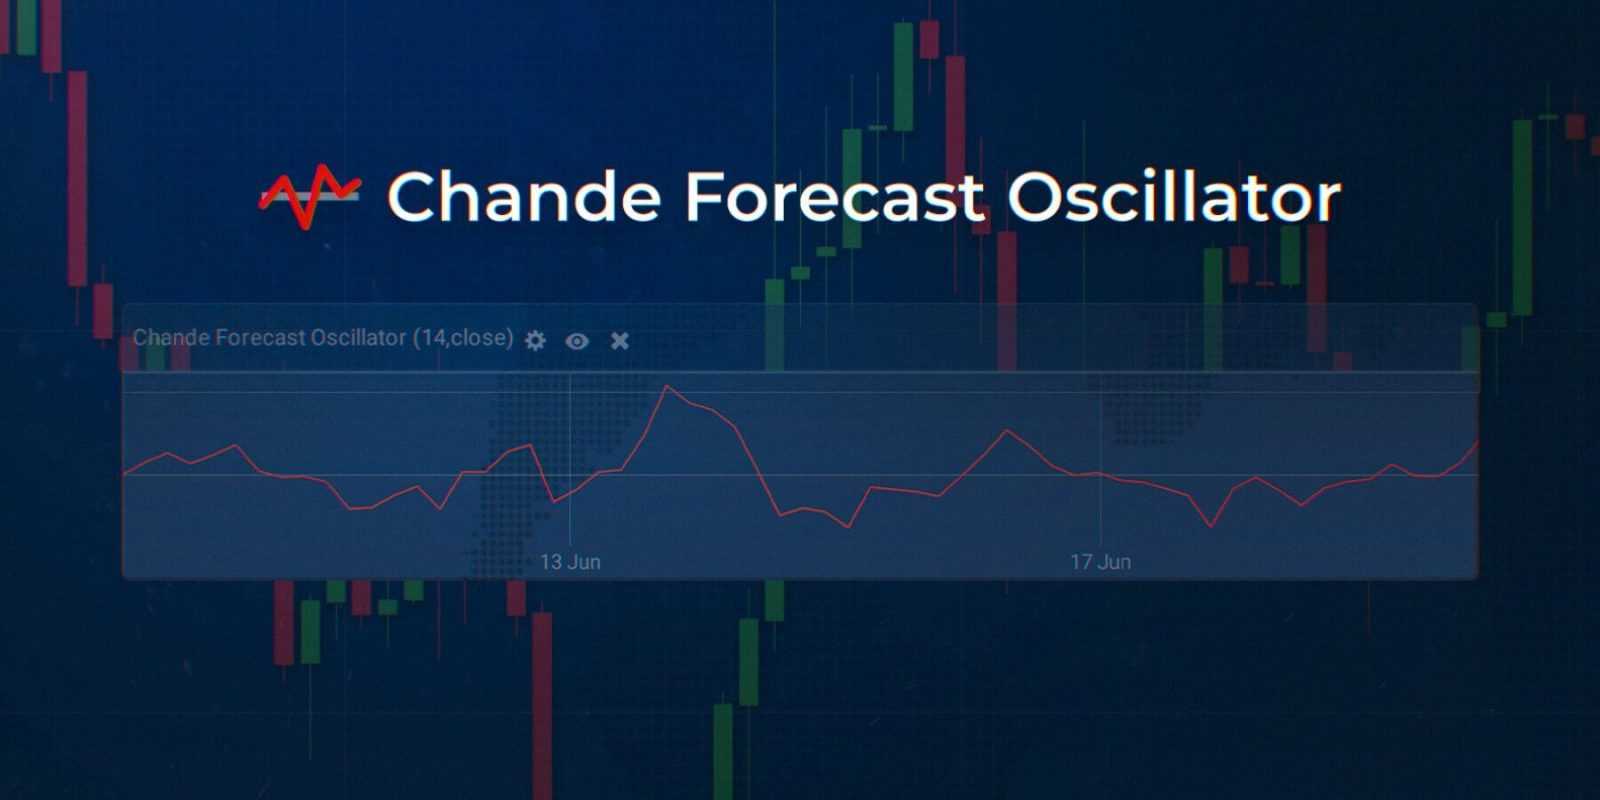 学习使用Chande Forecast Oscillator估算资产价格